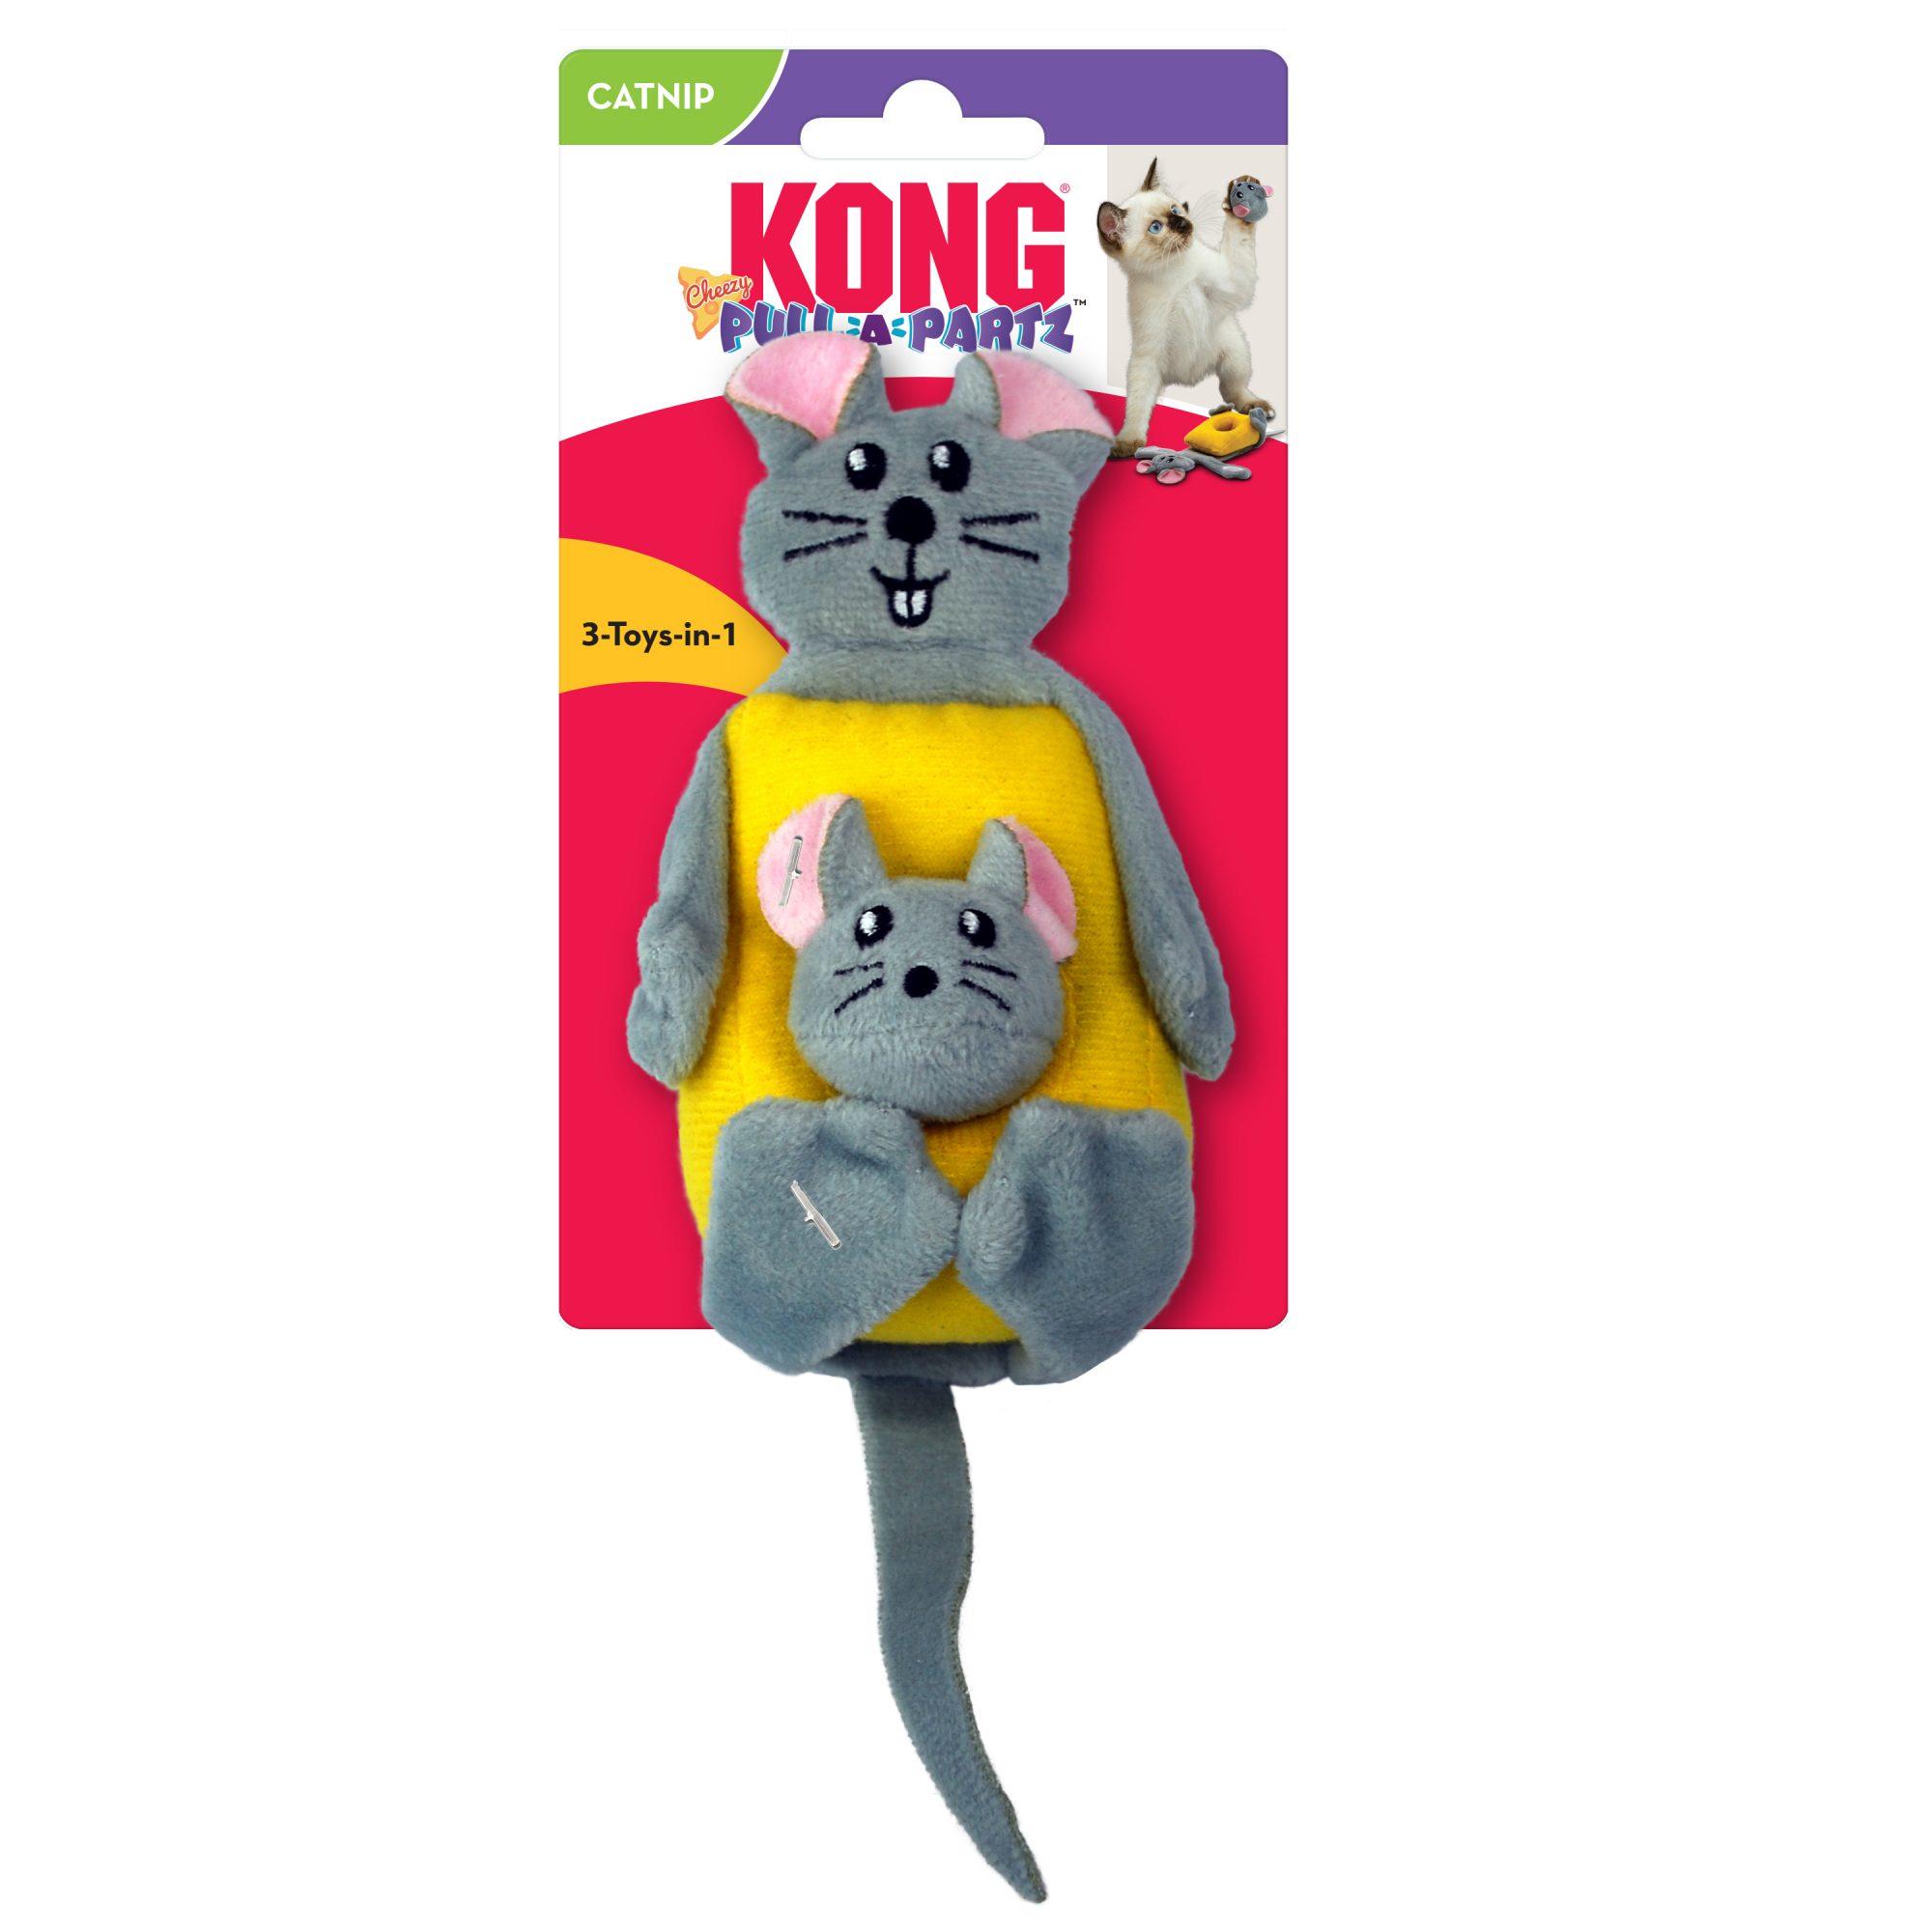 KONG Pull-a-partz Cheezy per gatti